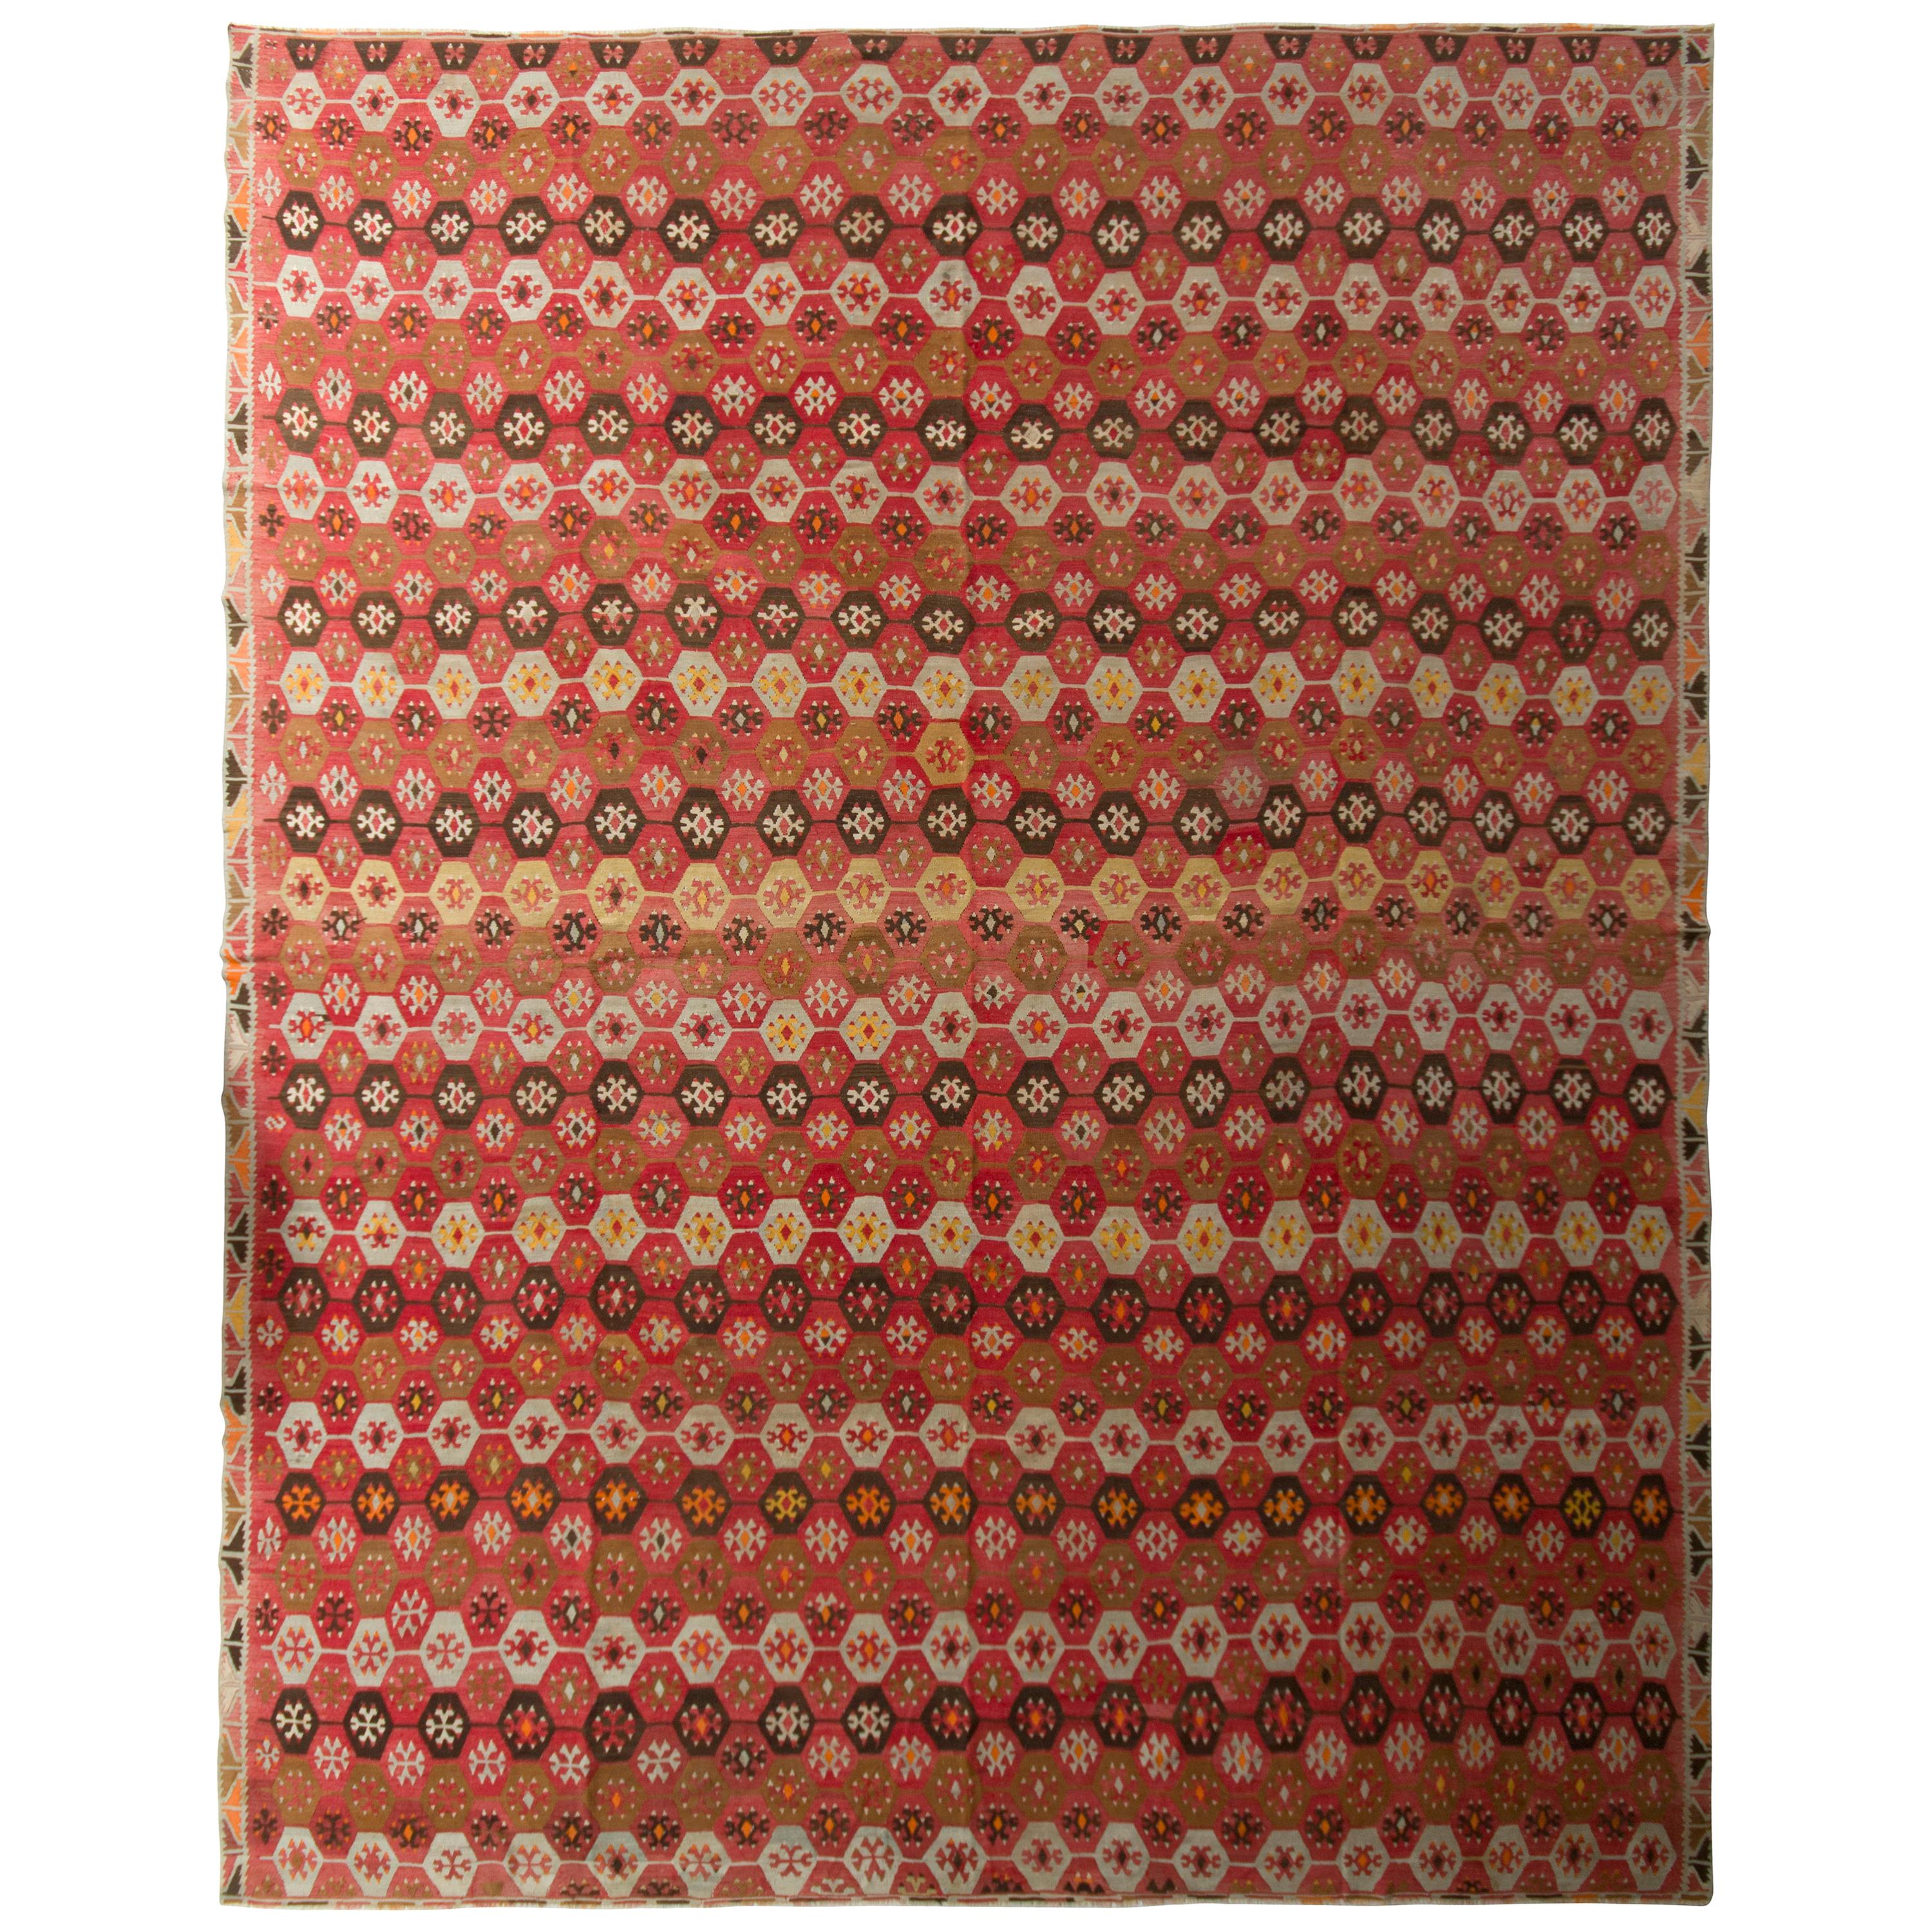 1950s Vintage Kilim Rug Geometric Red and Brown Midcentury Sarkisla Pattern For Sale